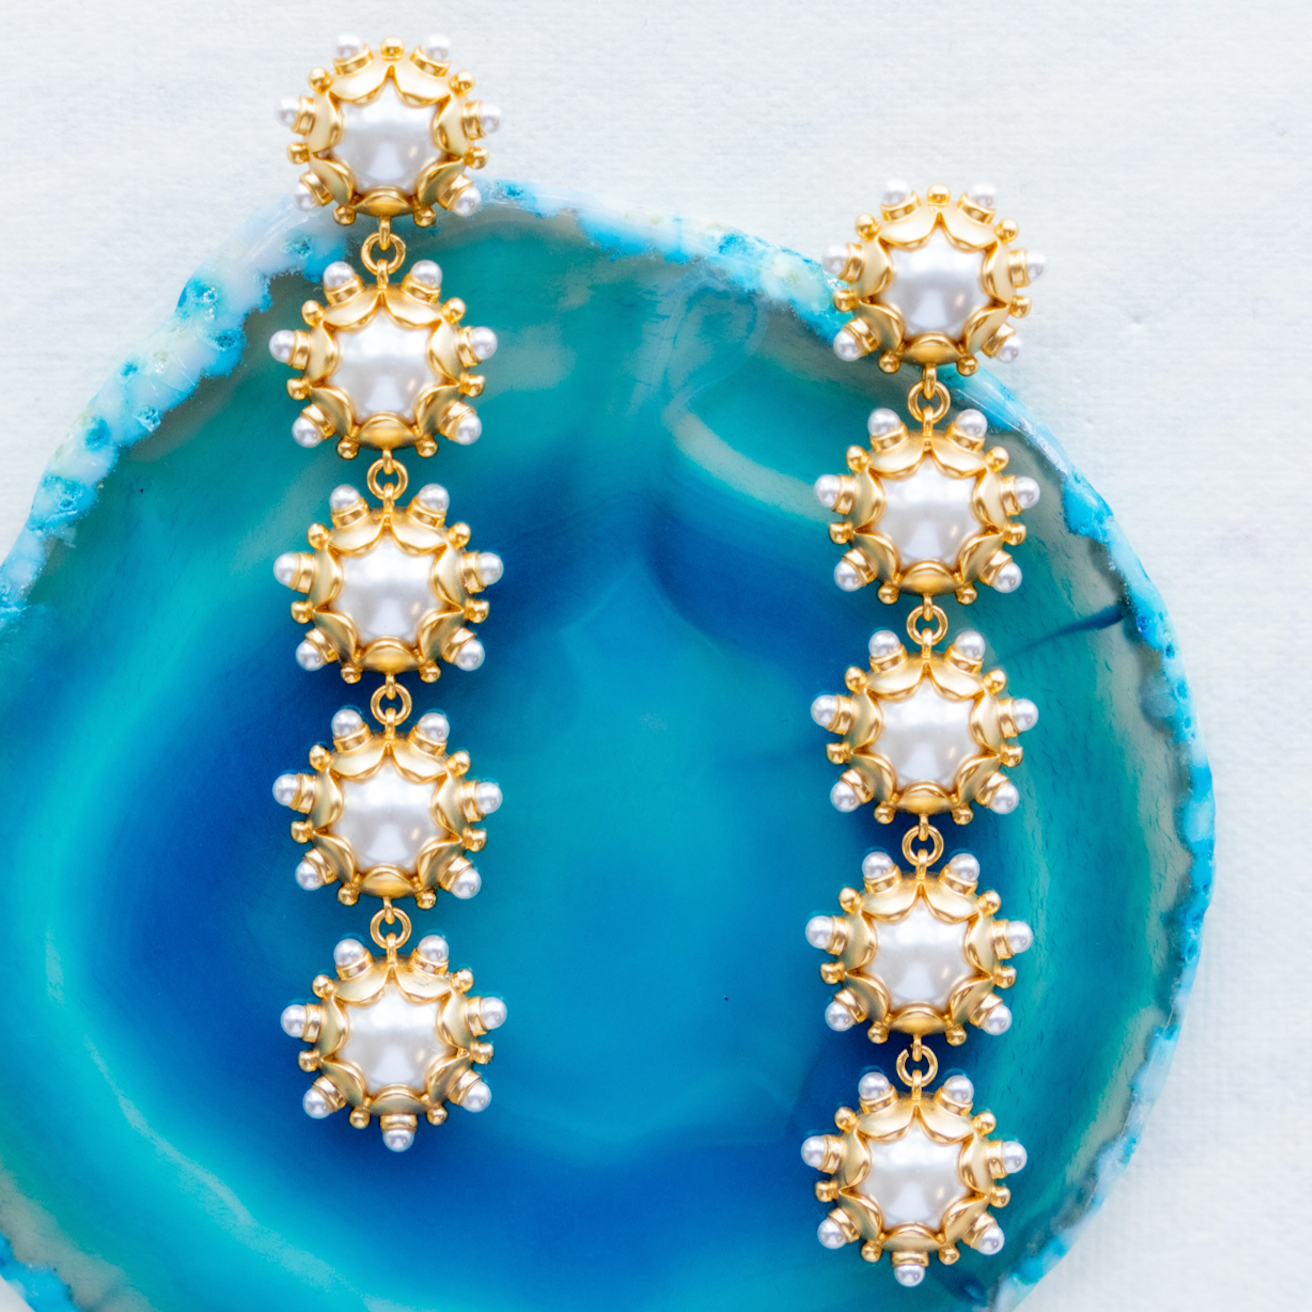 Perla Earrings by Gresham